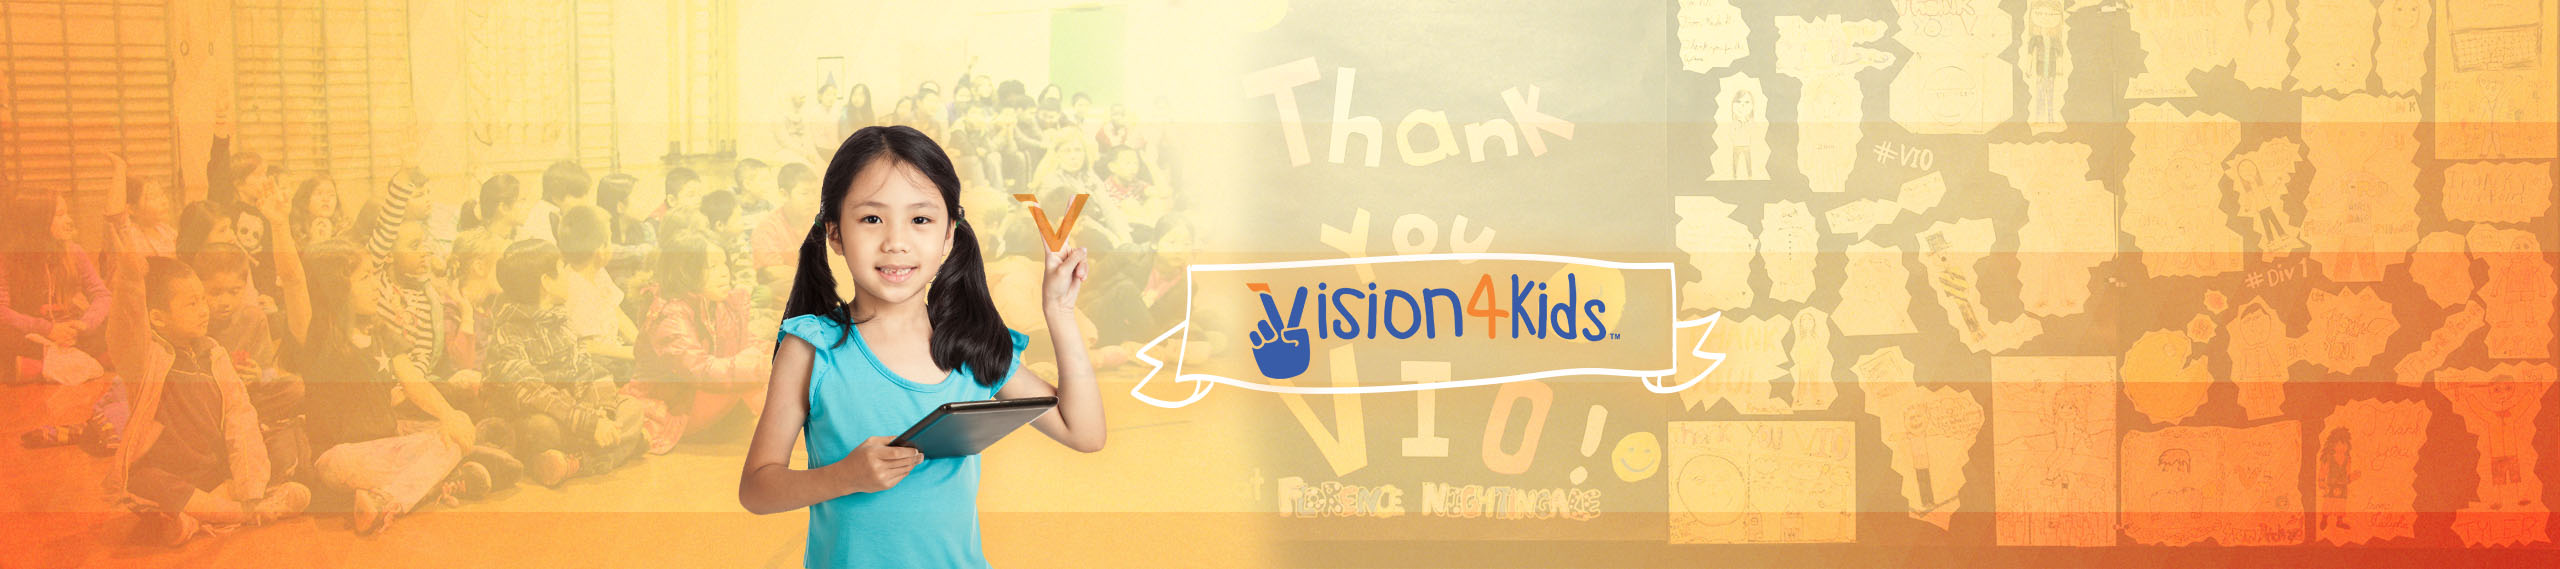 Vision4Kids